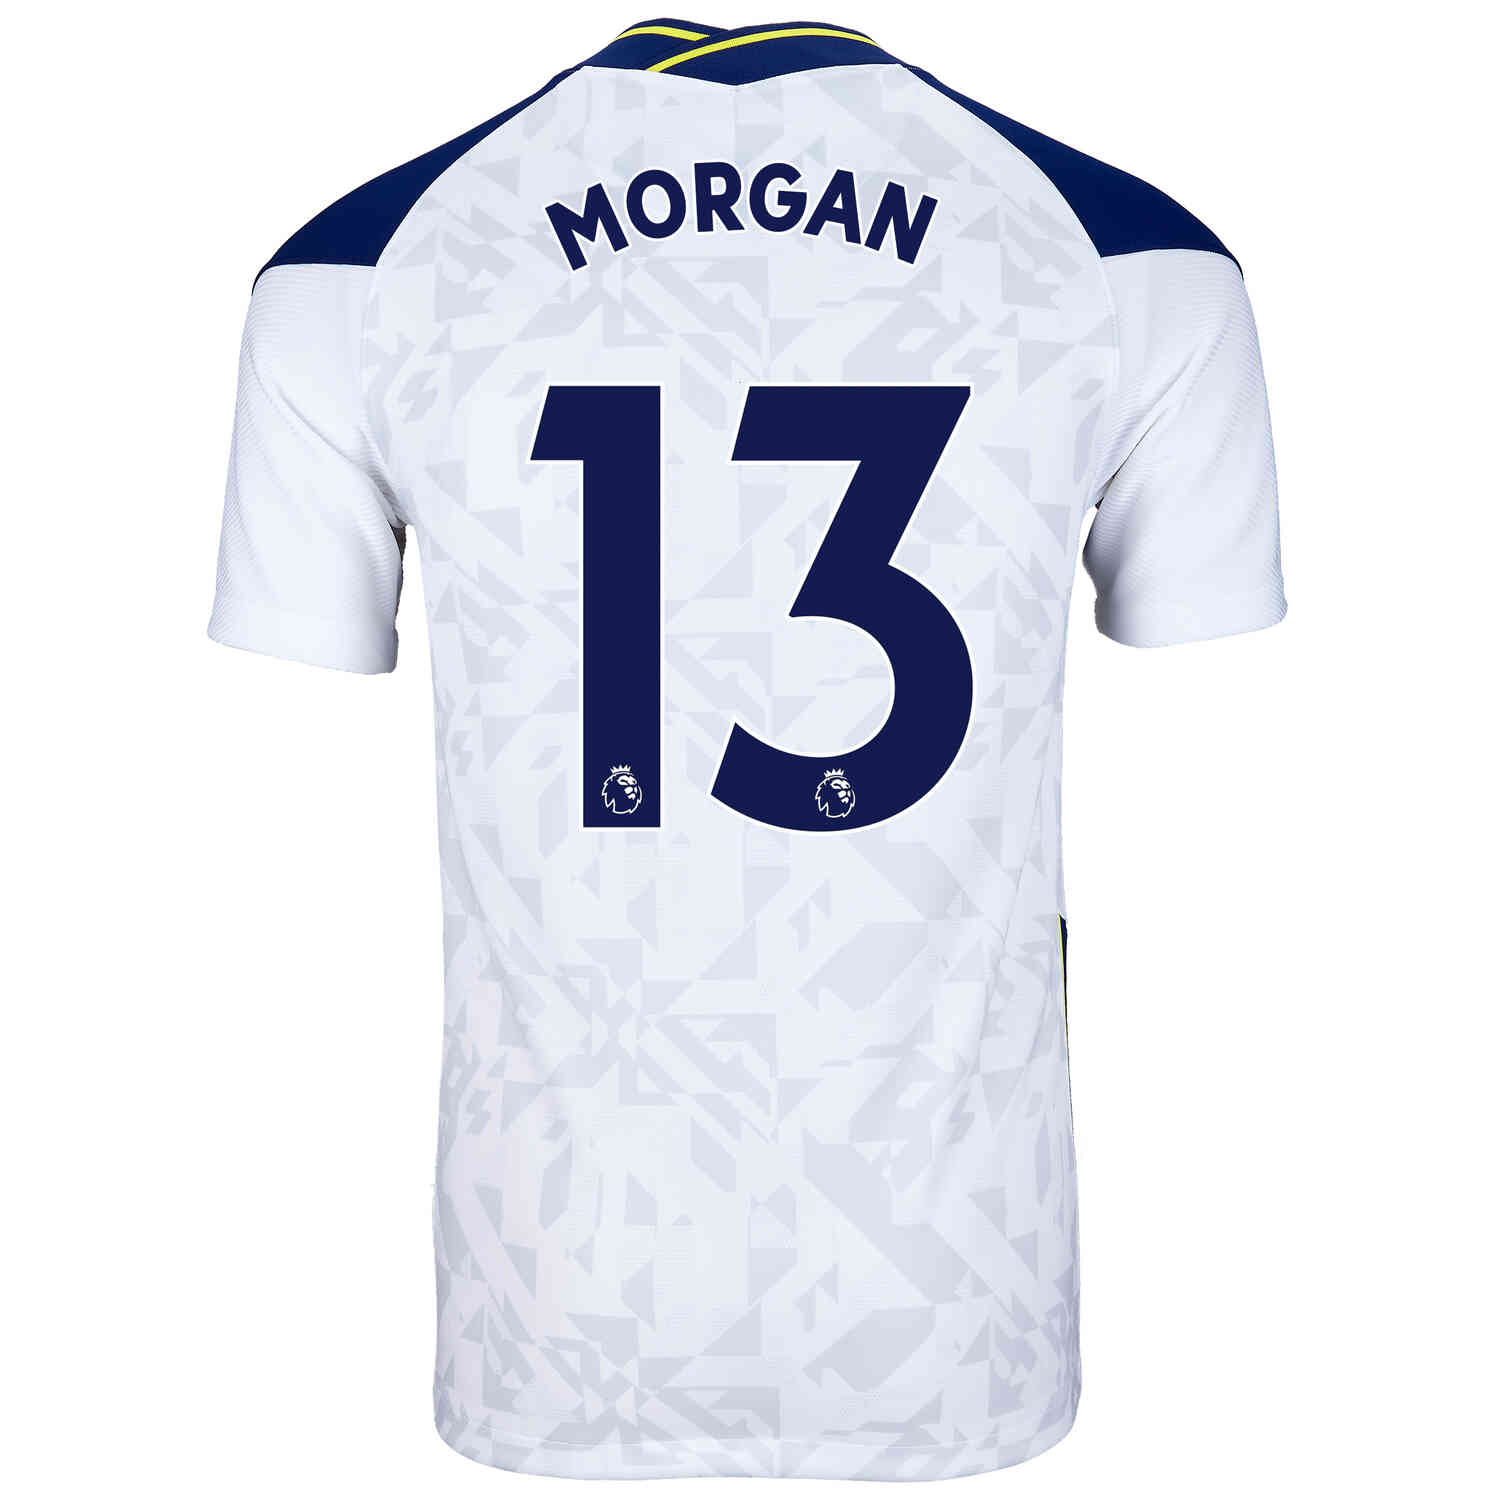 2020/21 Nike Alex Morgan Tottenham 3rd Match Jersey